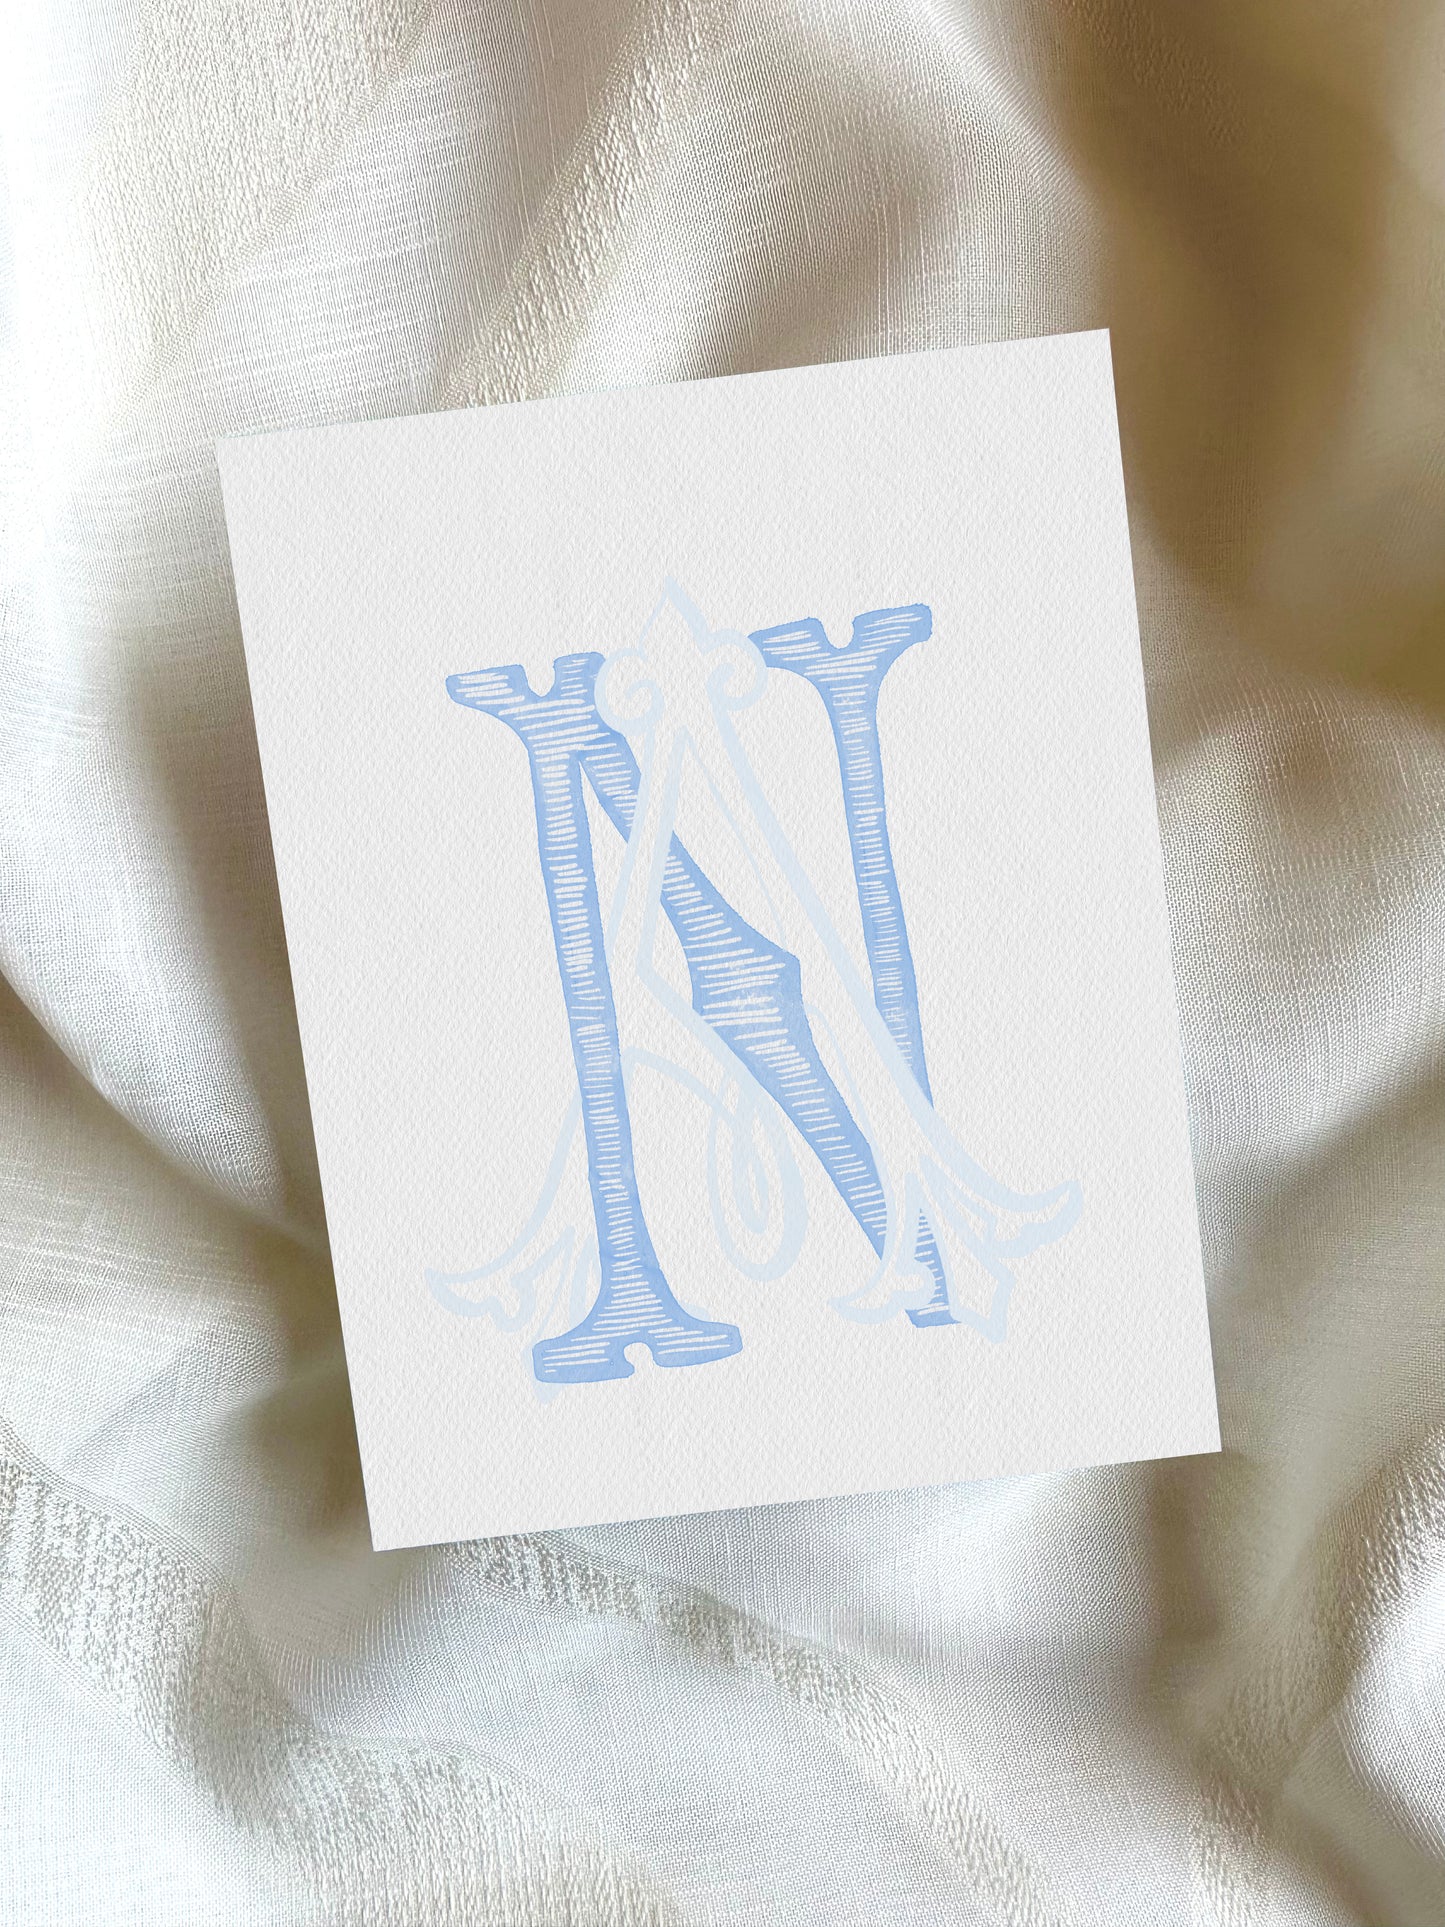 2 Letter Monogram with Letters AN NA | Digital Download - Wedding Monogram SVG, Personal Logo, Wedding Logo for Wedding Invitations